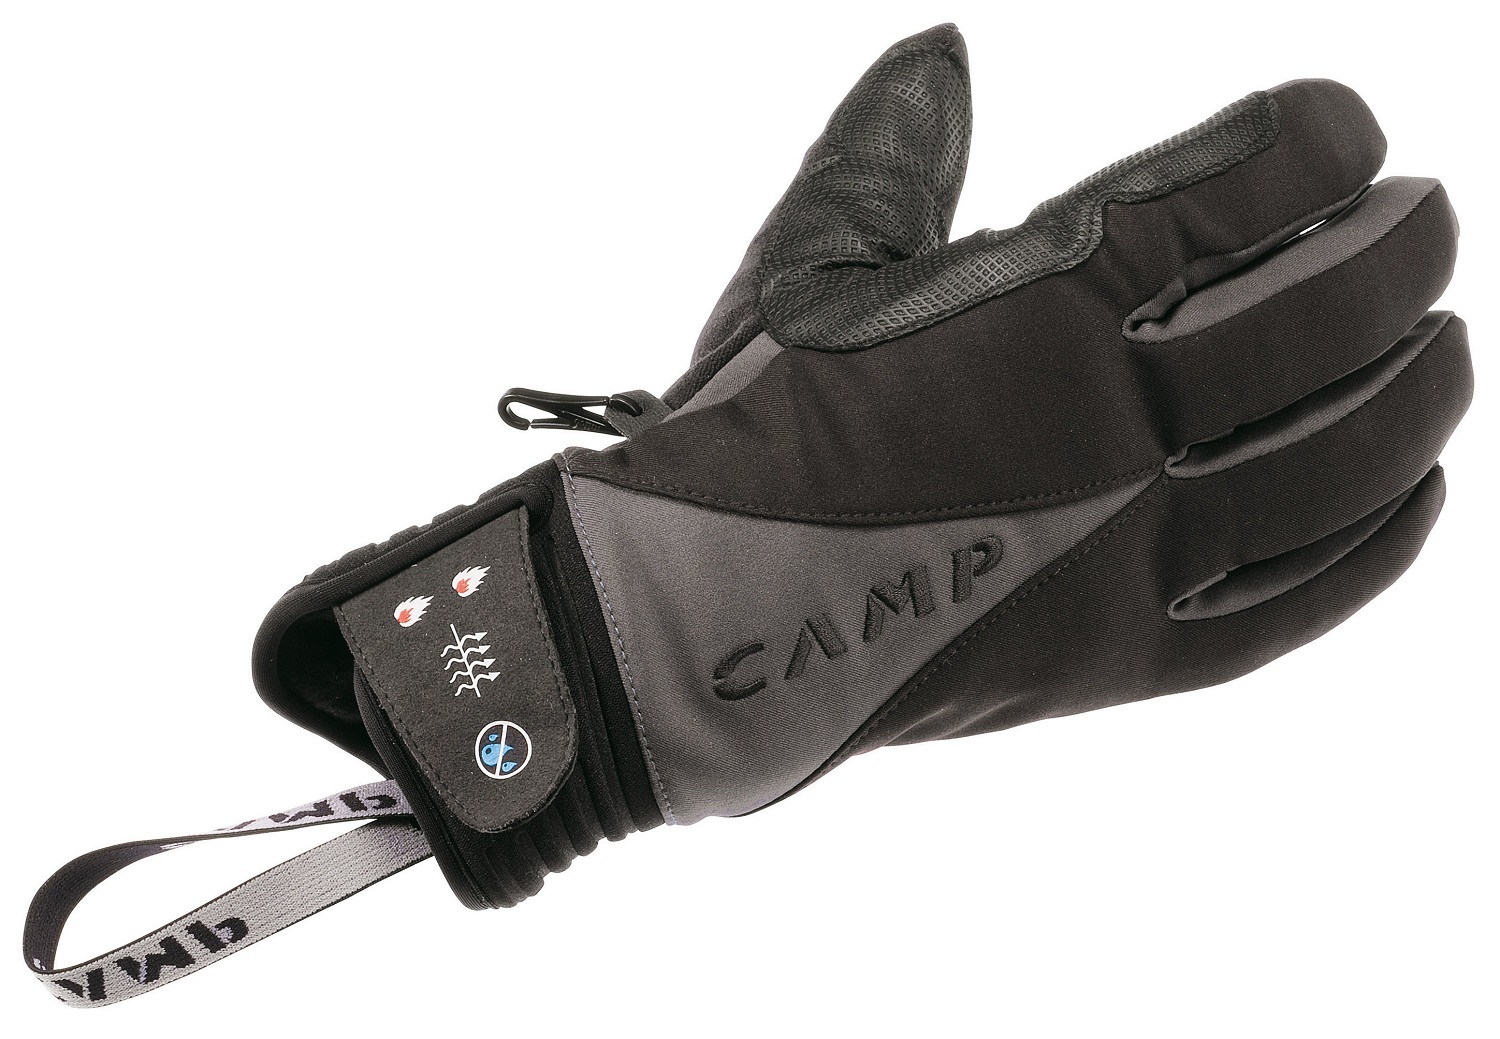 CAMP G Tech Dry Glove